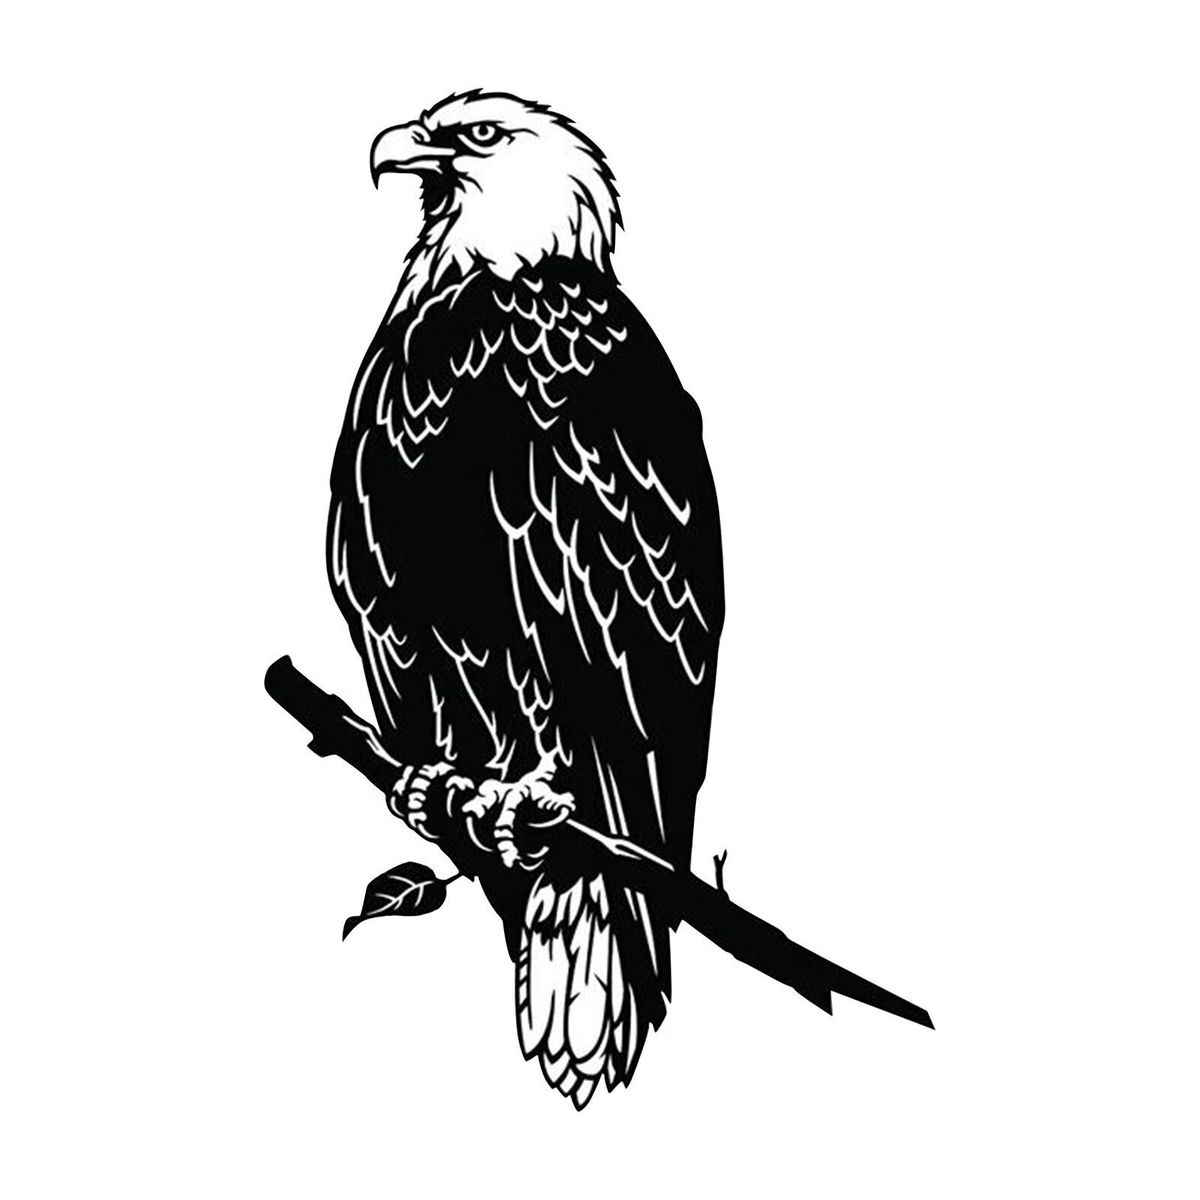 "Herqona - Metal Bald Eagle Birds Yard Decor - Black